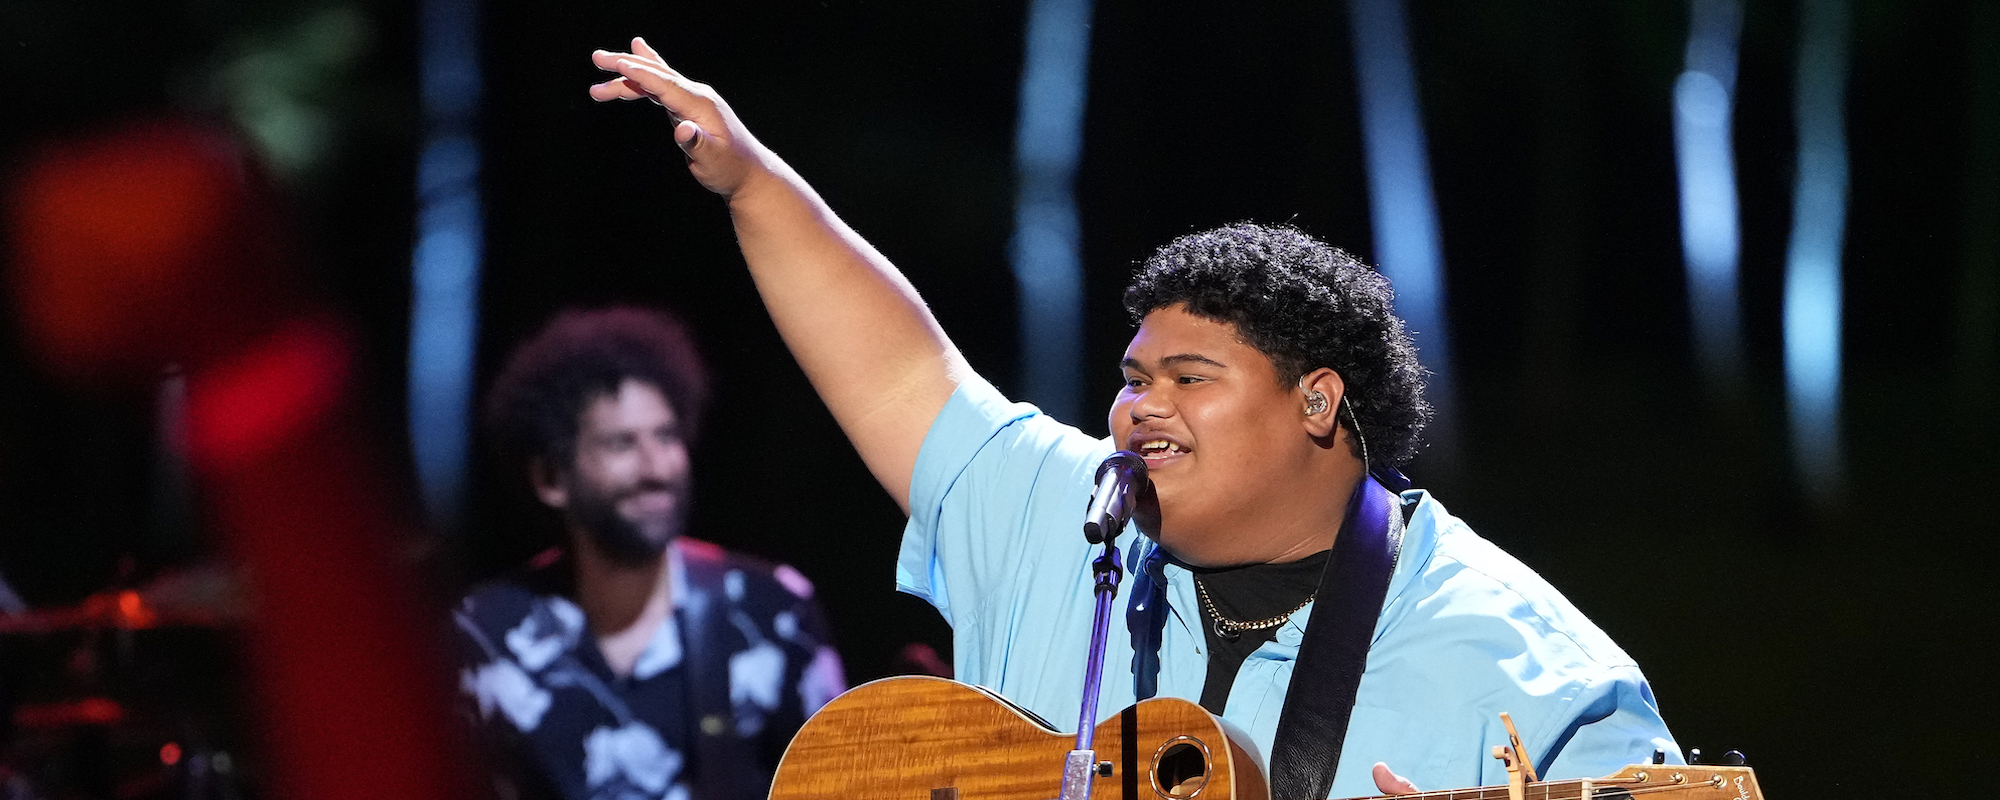 Iam Tongi Goes Home to Hawaii for ‘American Idol’ Performance